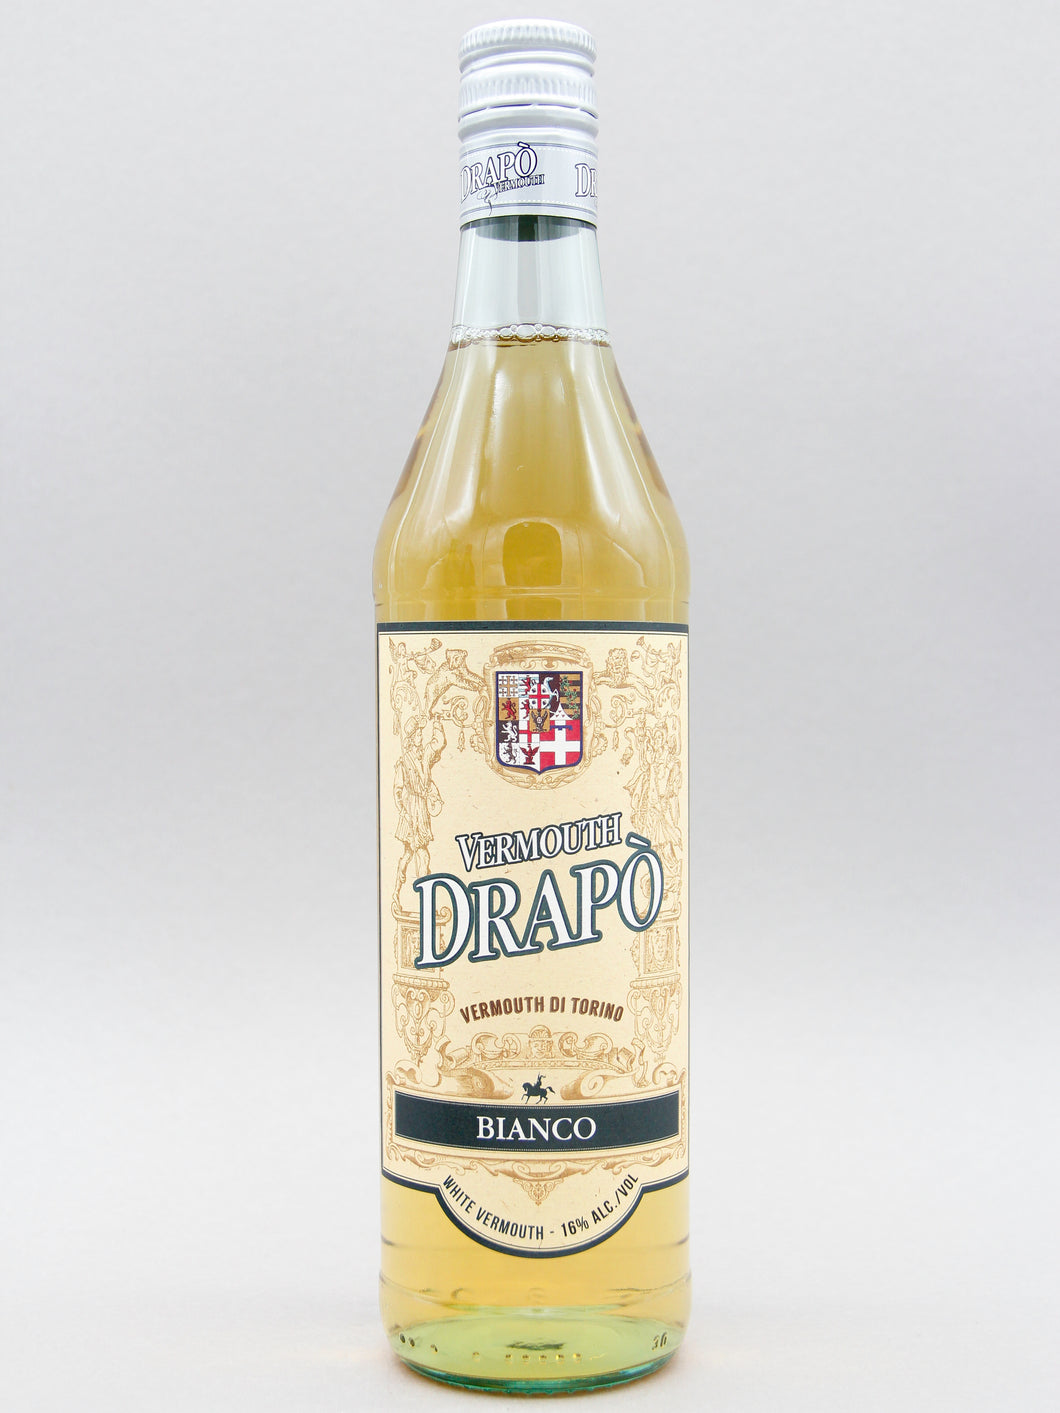 Drapo Vermouth Di Torino Bianco (16%, 75cl)